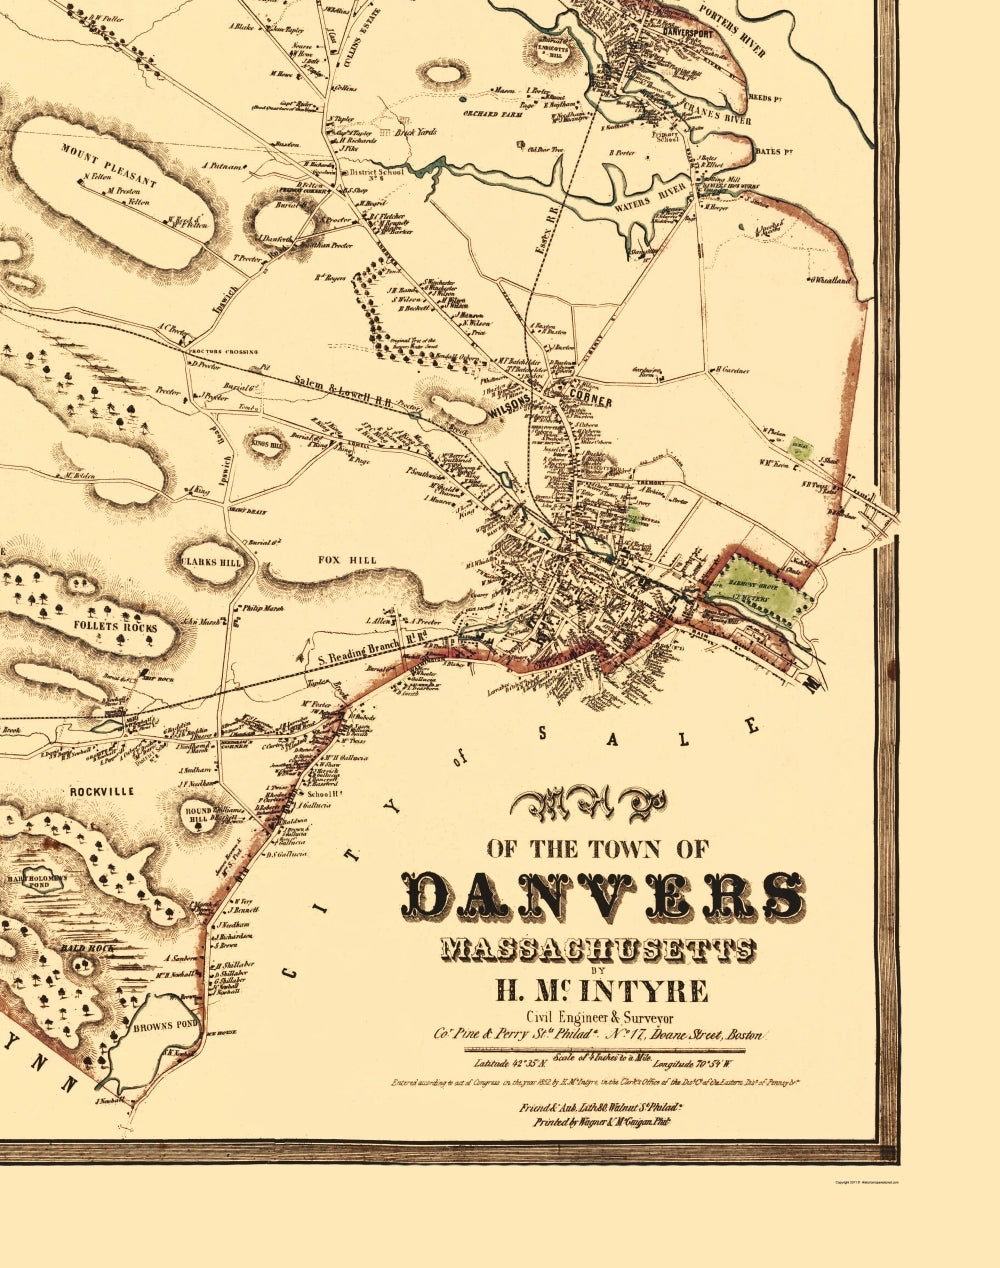 Historic City Map - Danvers Massachusetts County - Friend 1852 - 23 x 29.17 - Vintage Wall Art